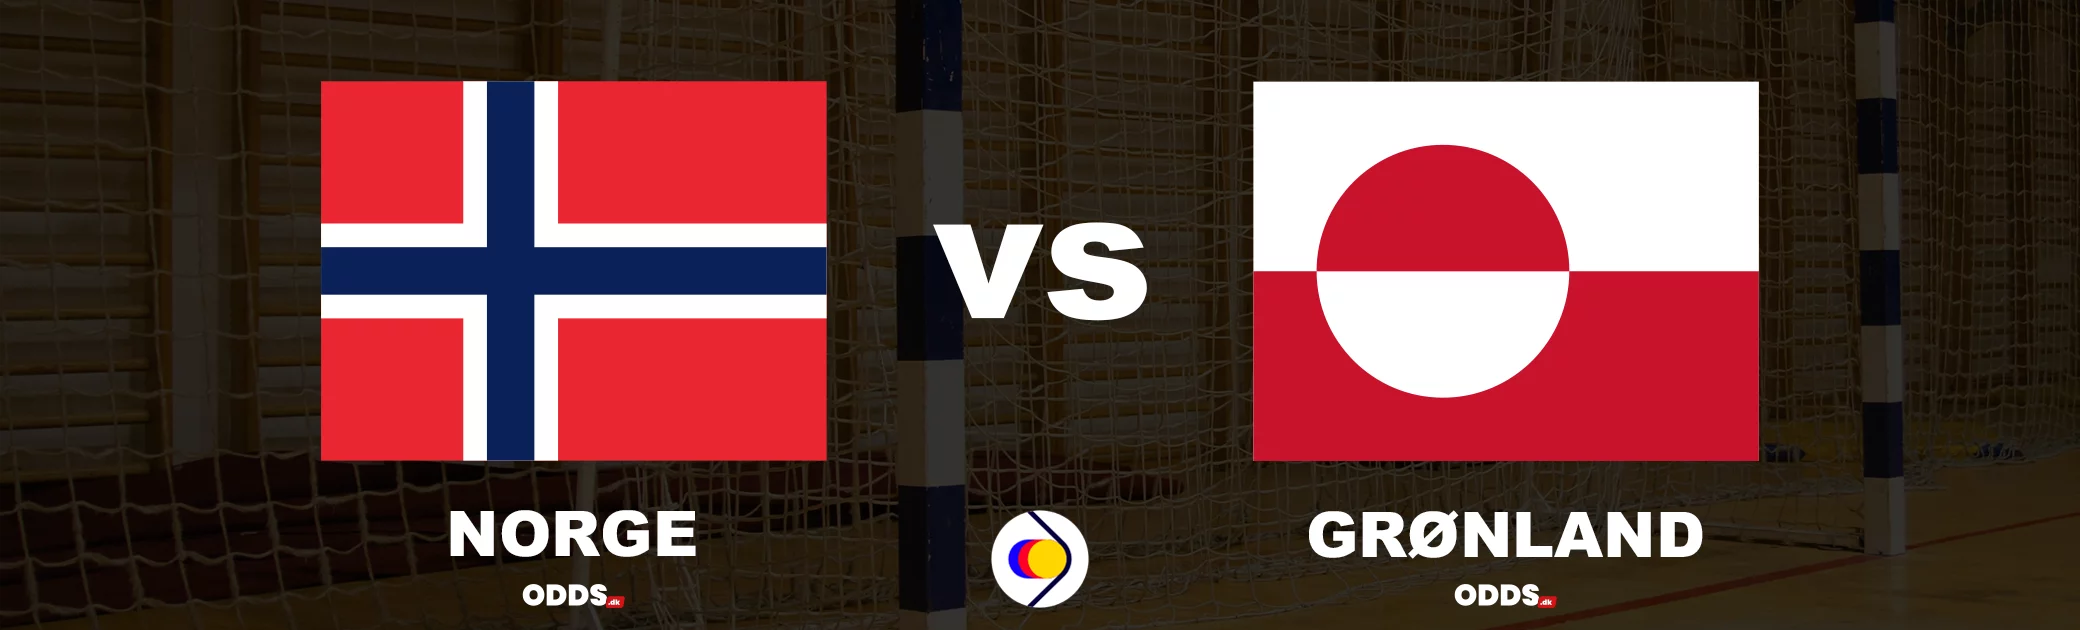 Norge vs Grønland